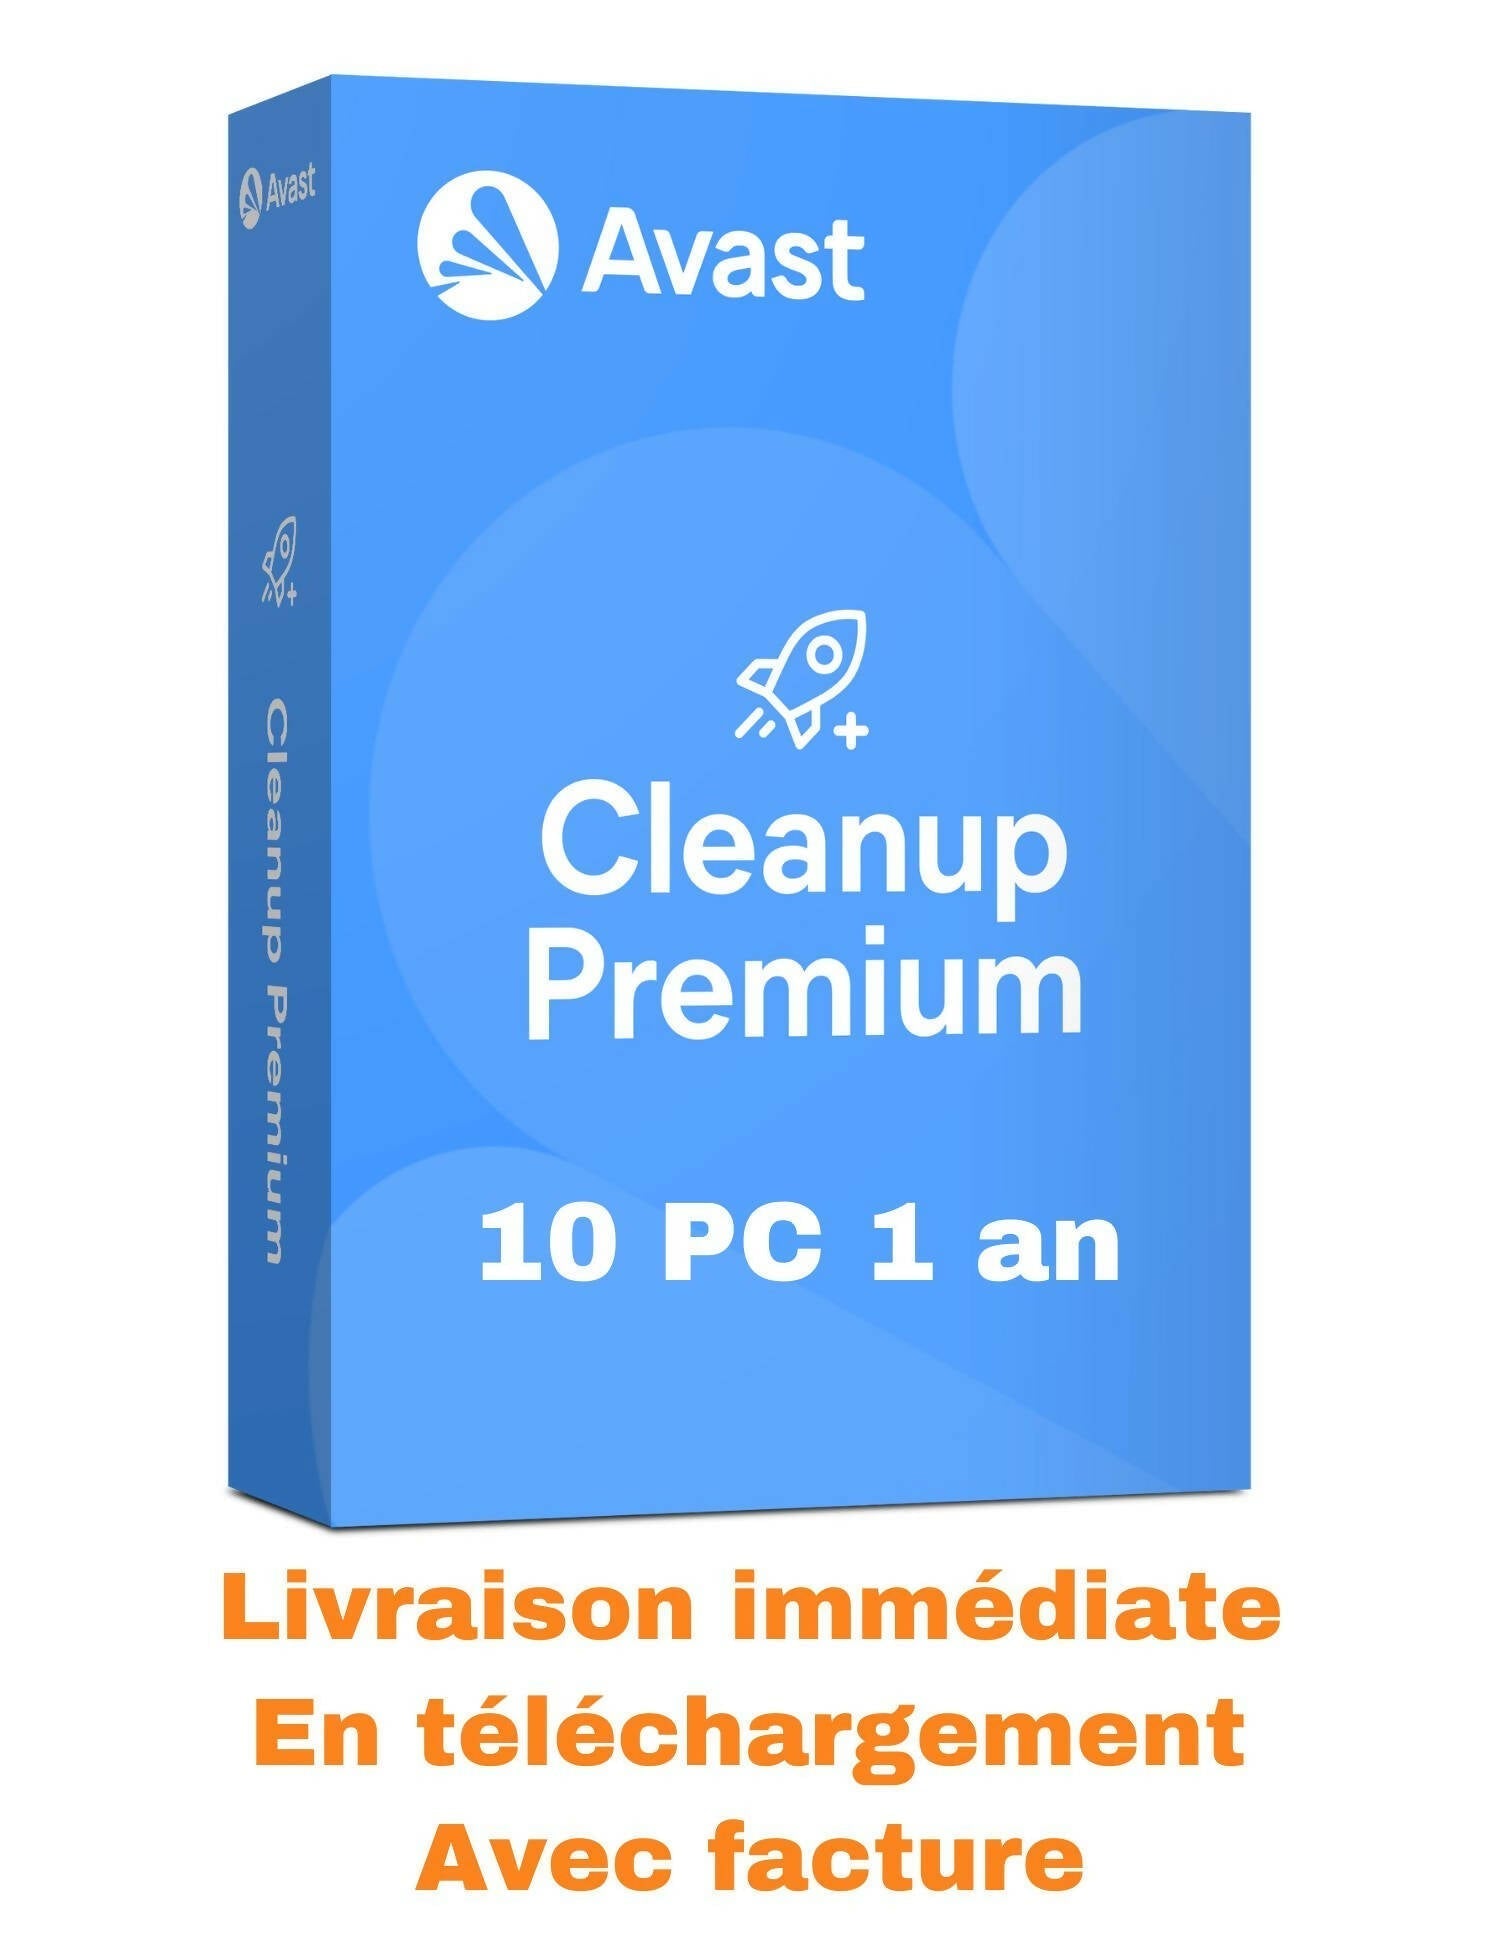 Avast Cleanup Premium 10 Appareils 1 an clicktofournisseur.com